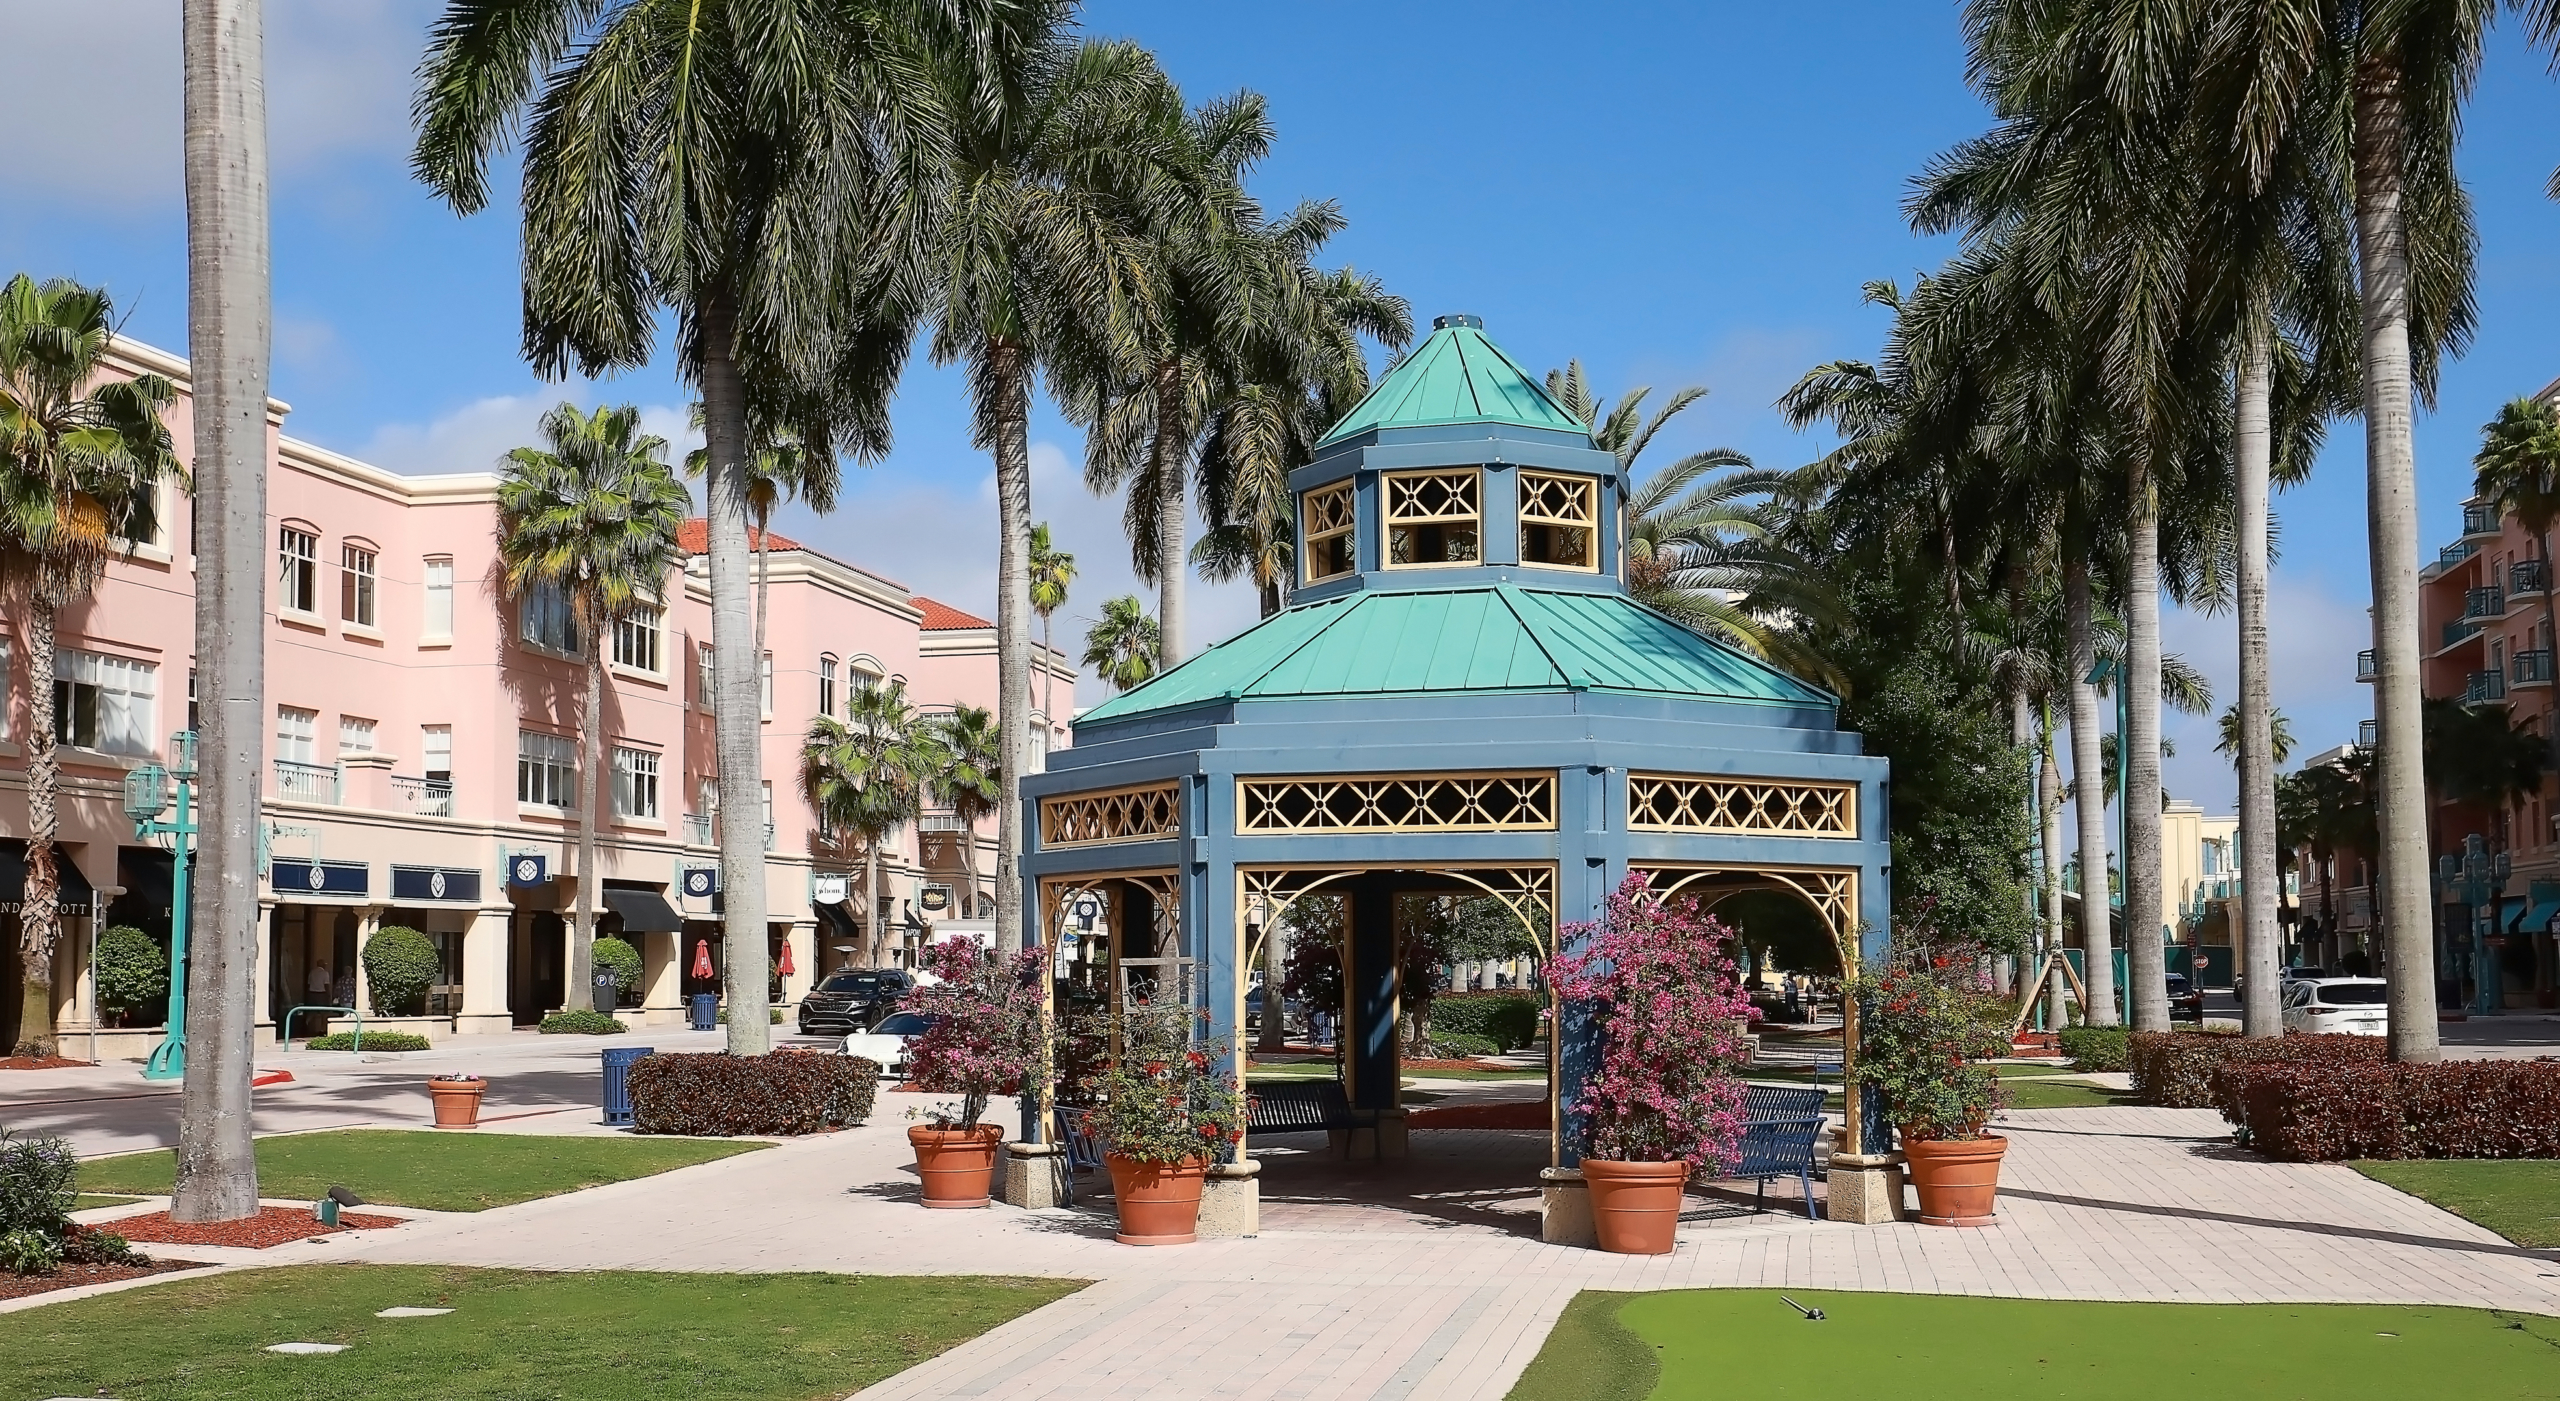 Downtown Mizner Park, Boca Raton, Florida, USA available as Framed